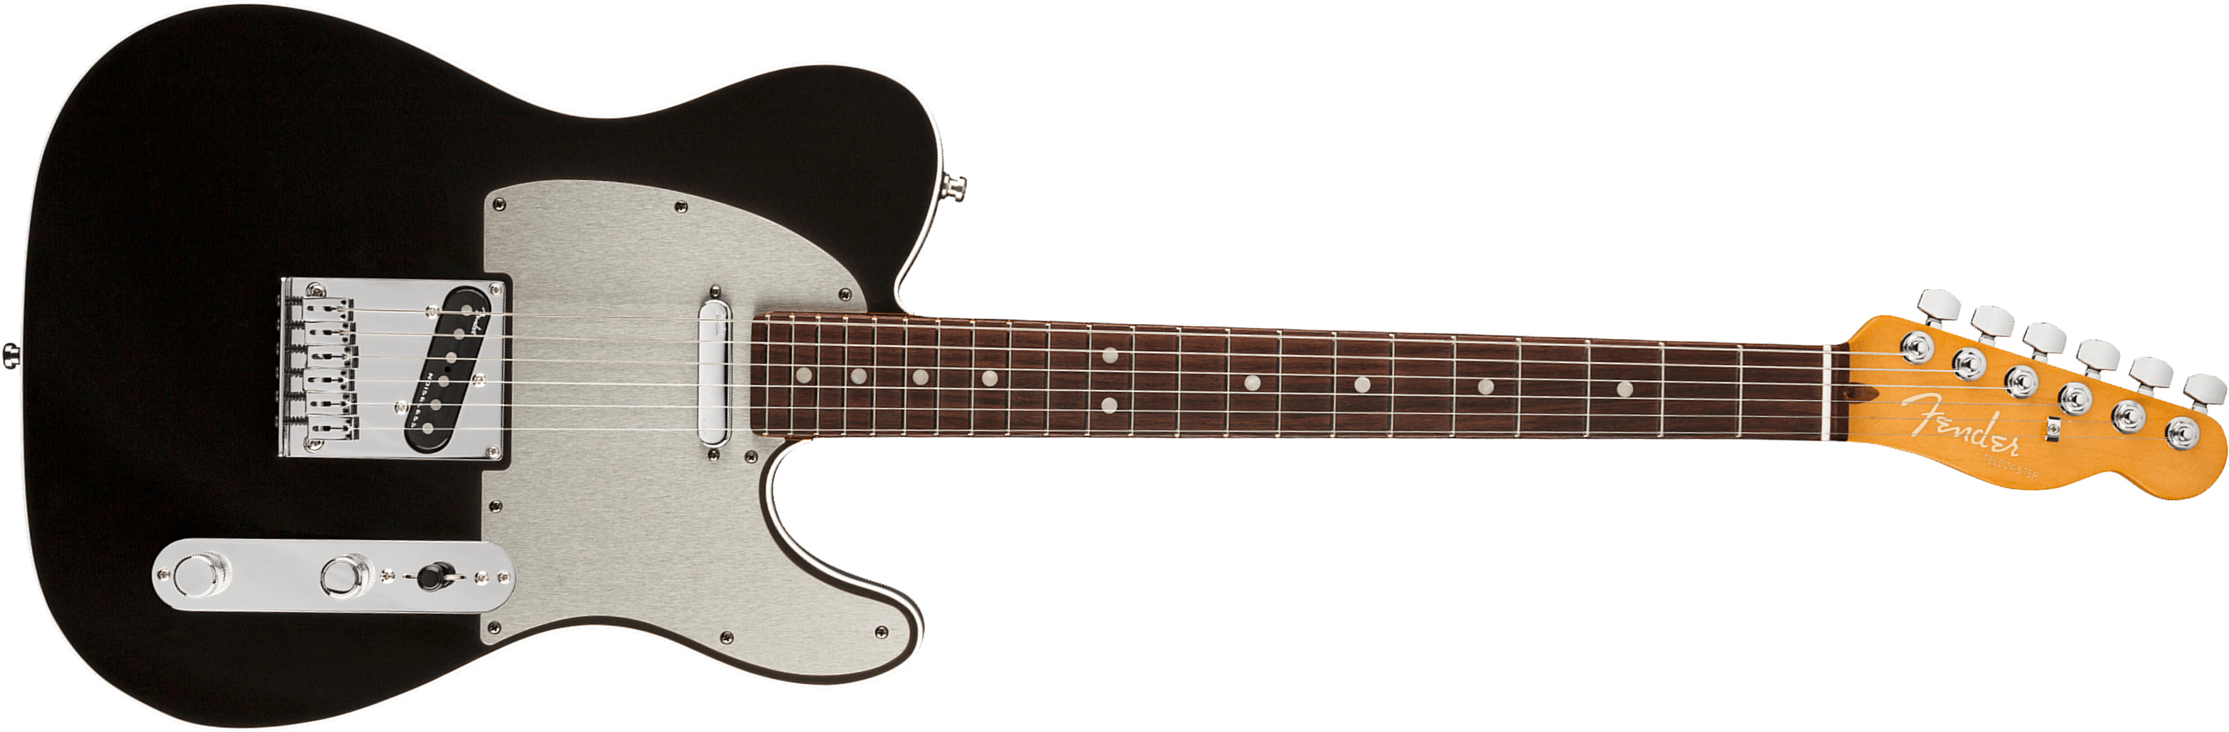 Fender Tele American Ultra 2019 Usa Rw - Texas Tea - Guitarra eléctrica con forma de tel - Main picture